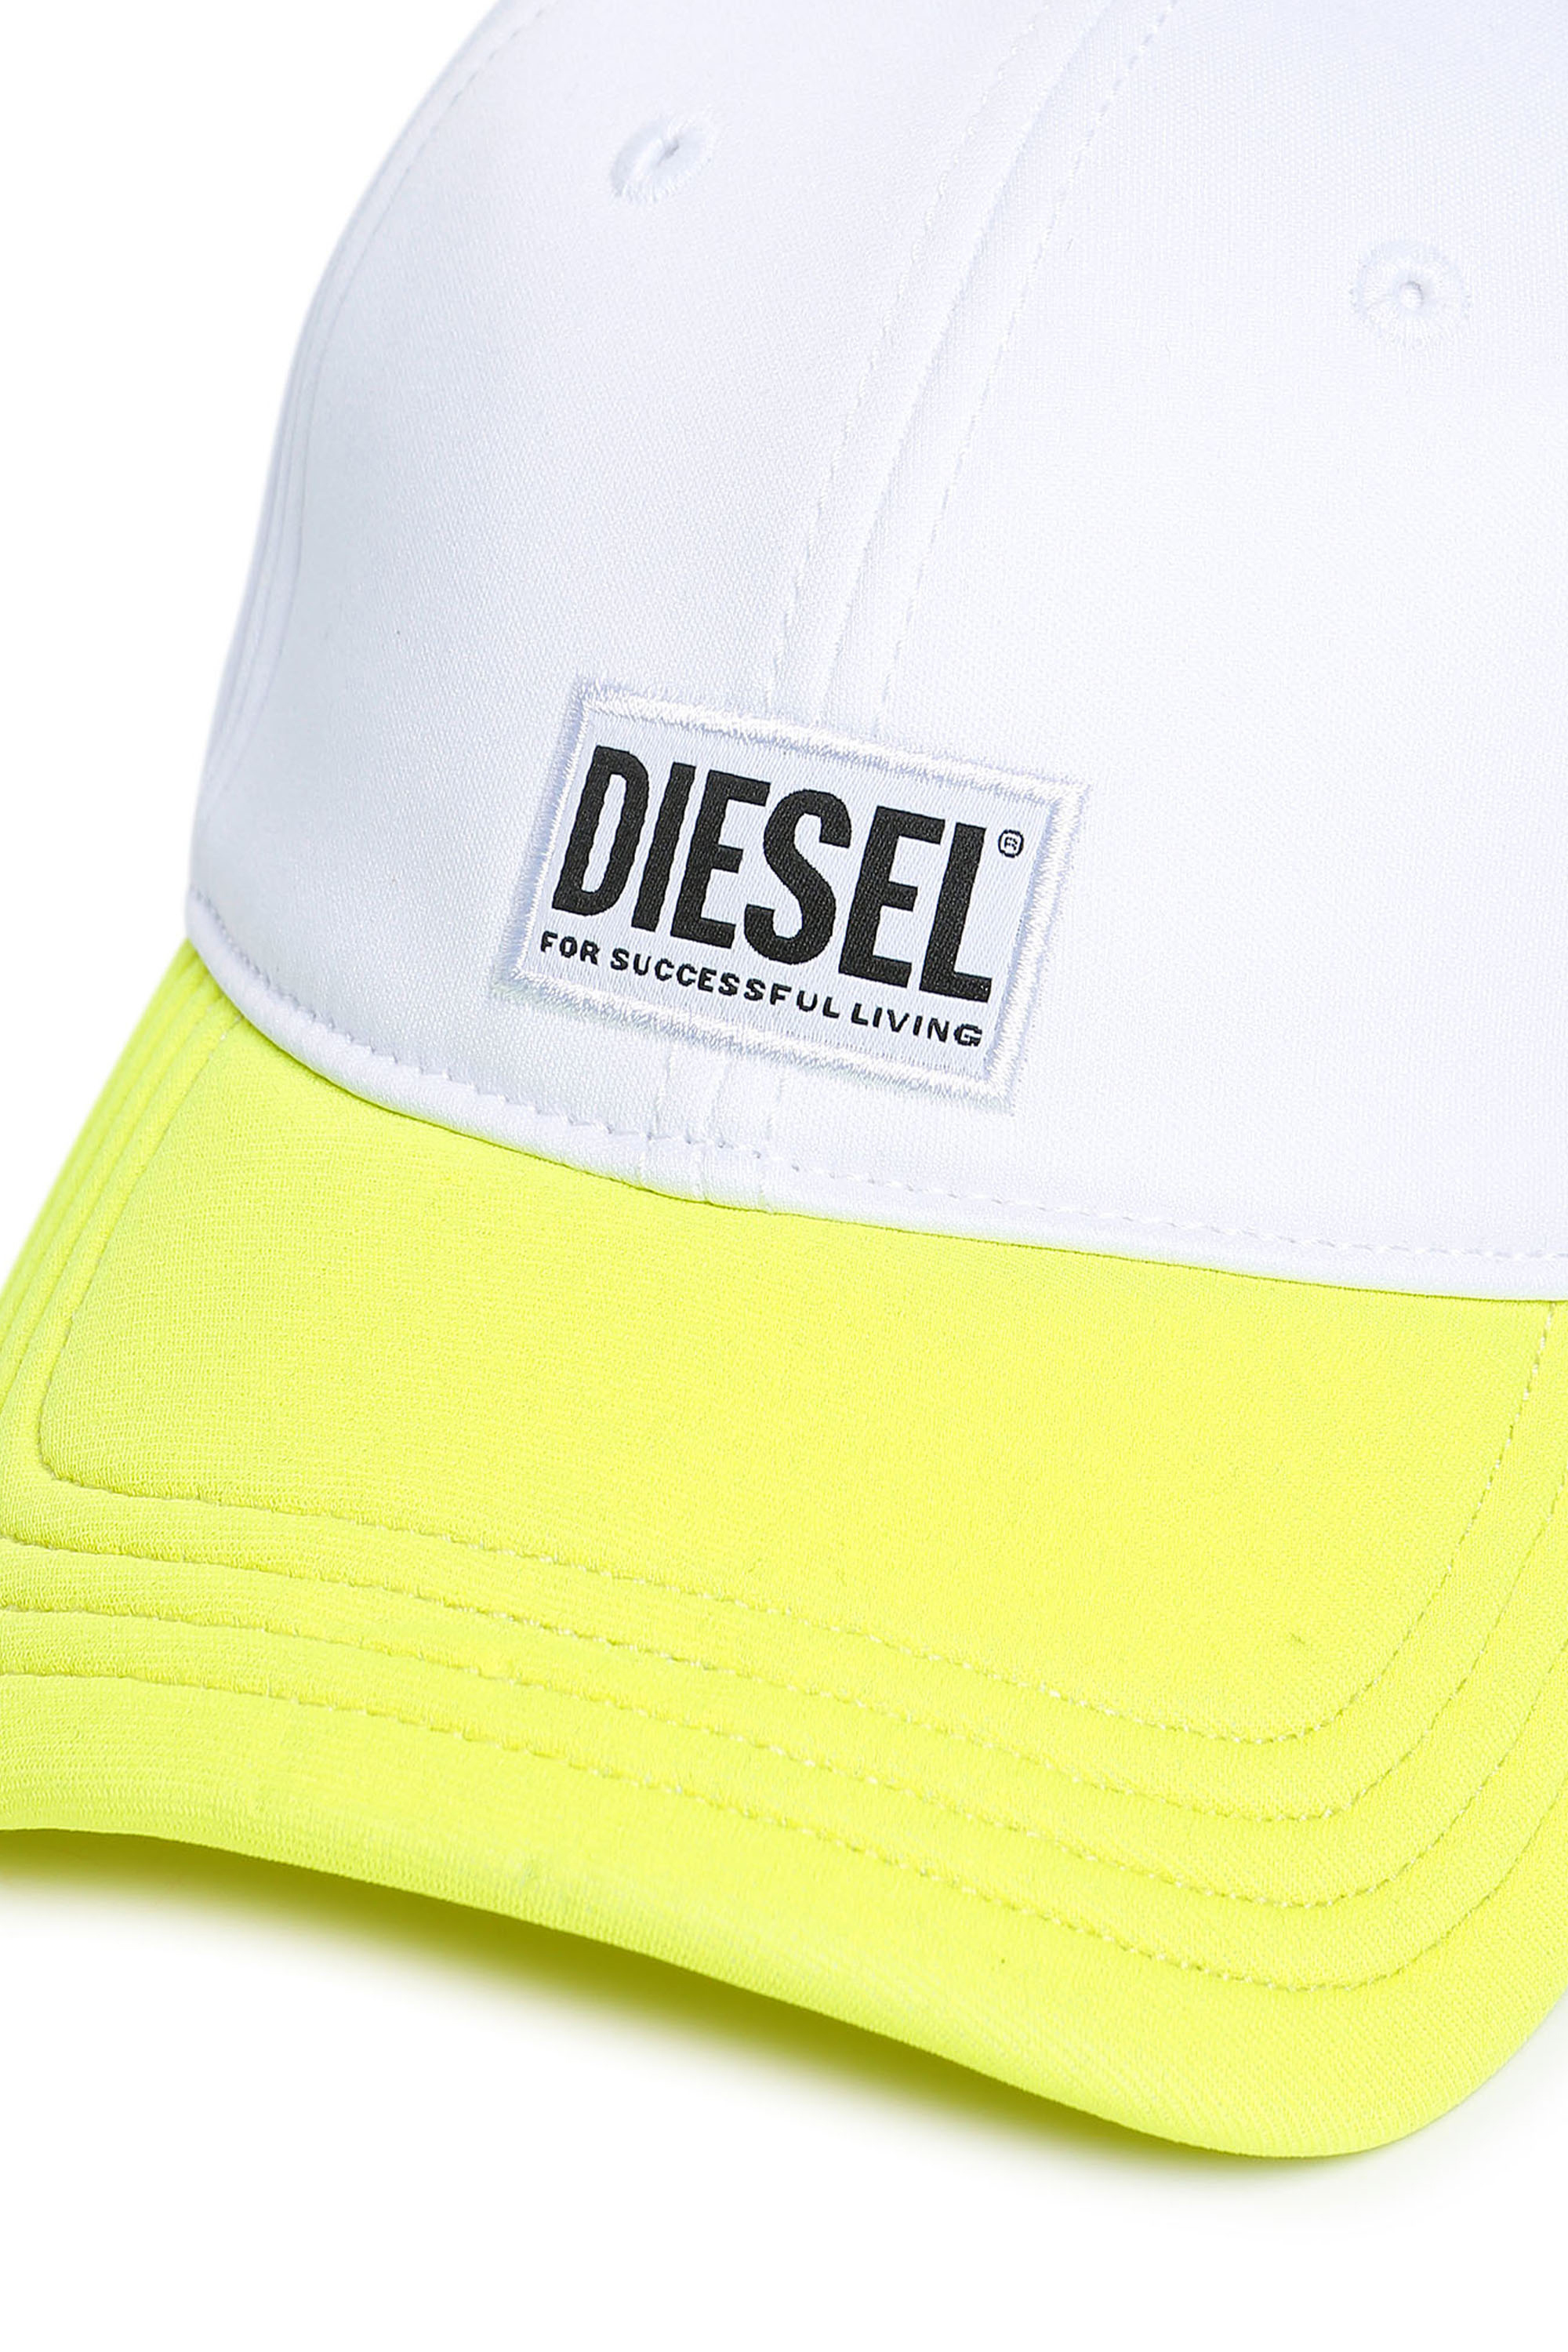 Diesel - FDURBO, White/Yellow - Image 3